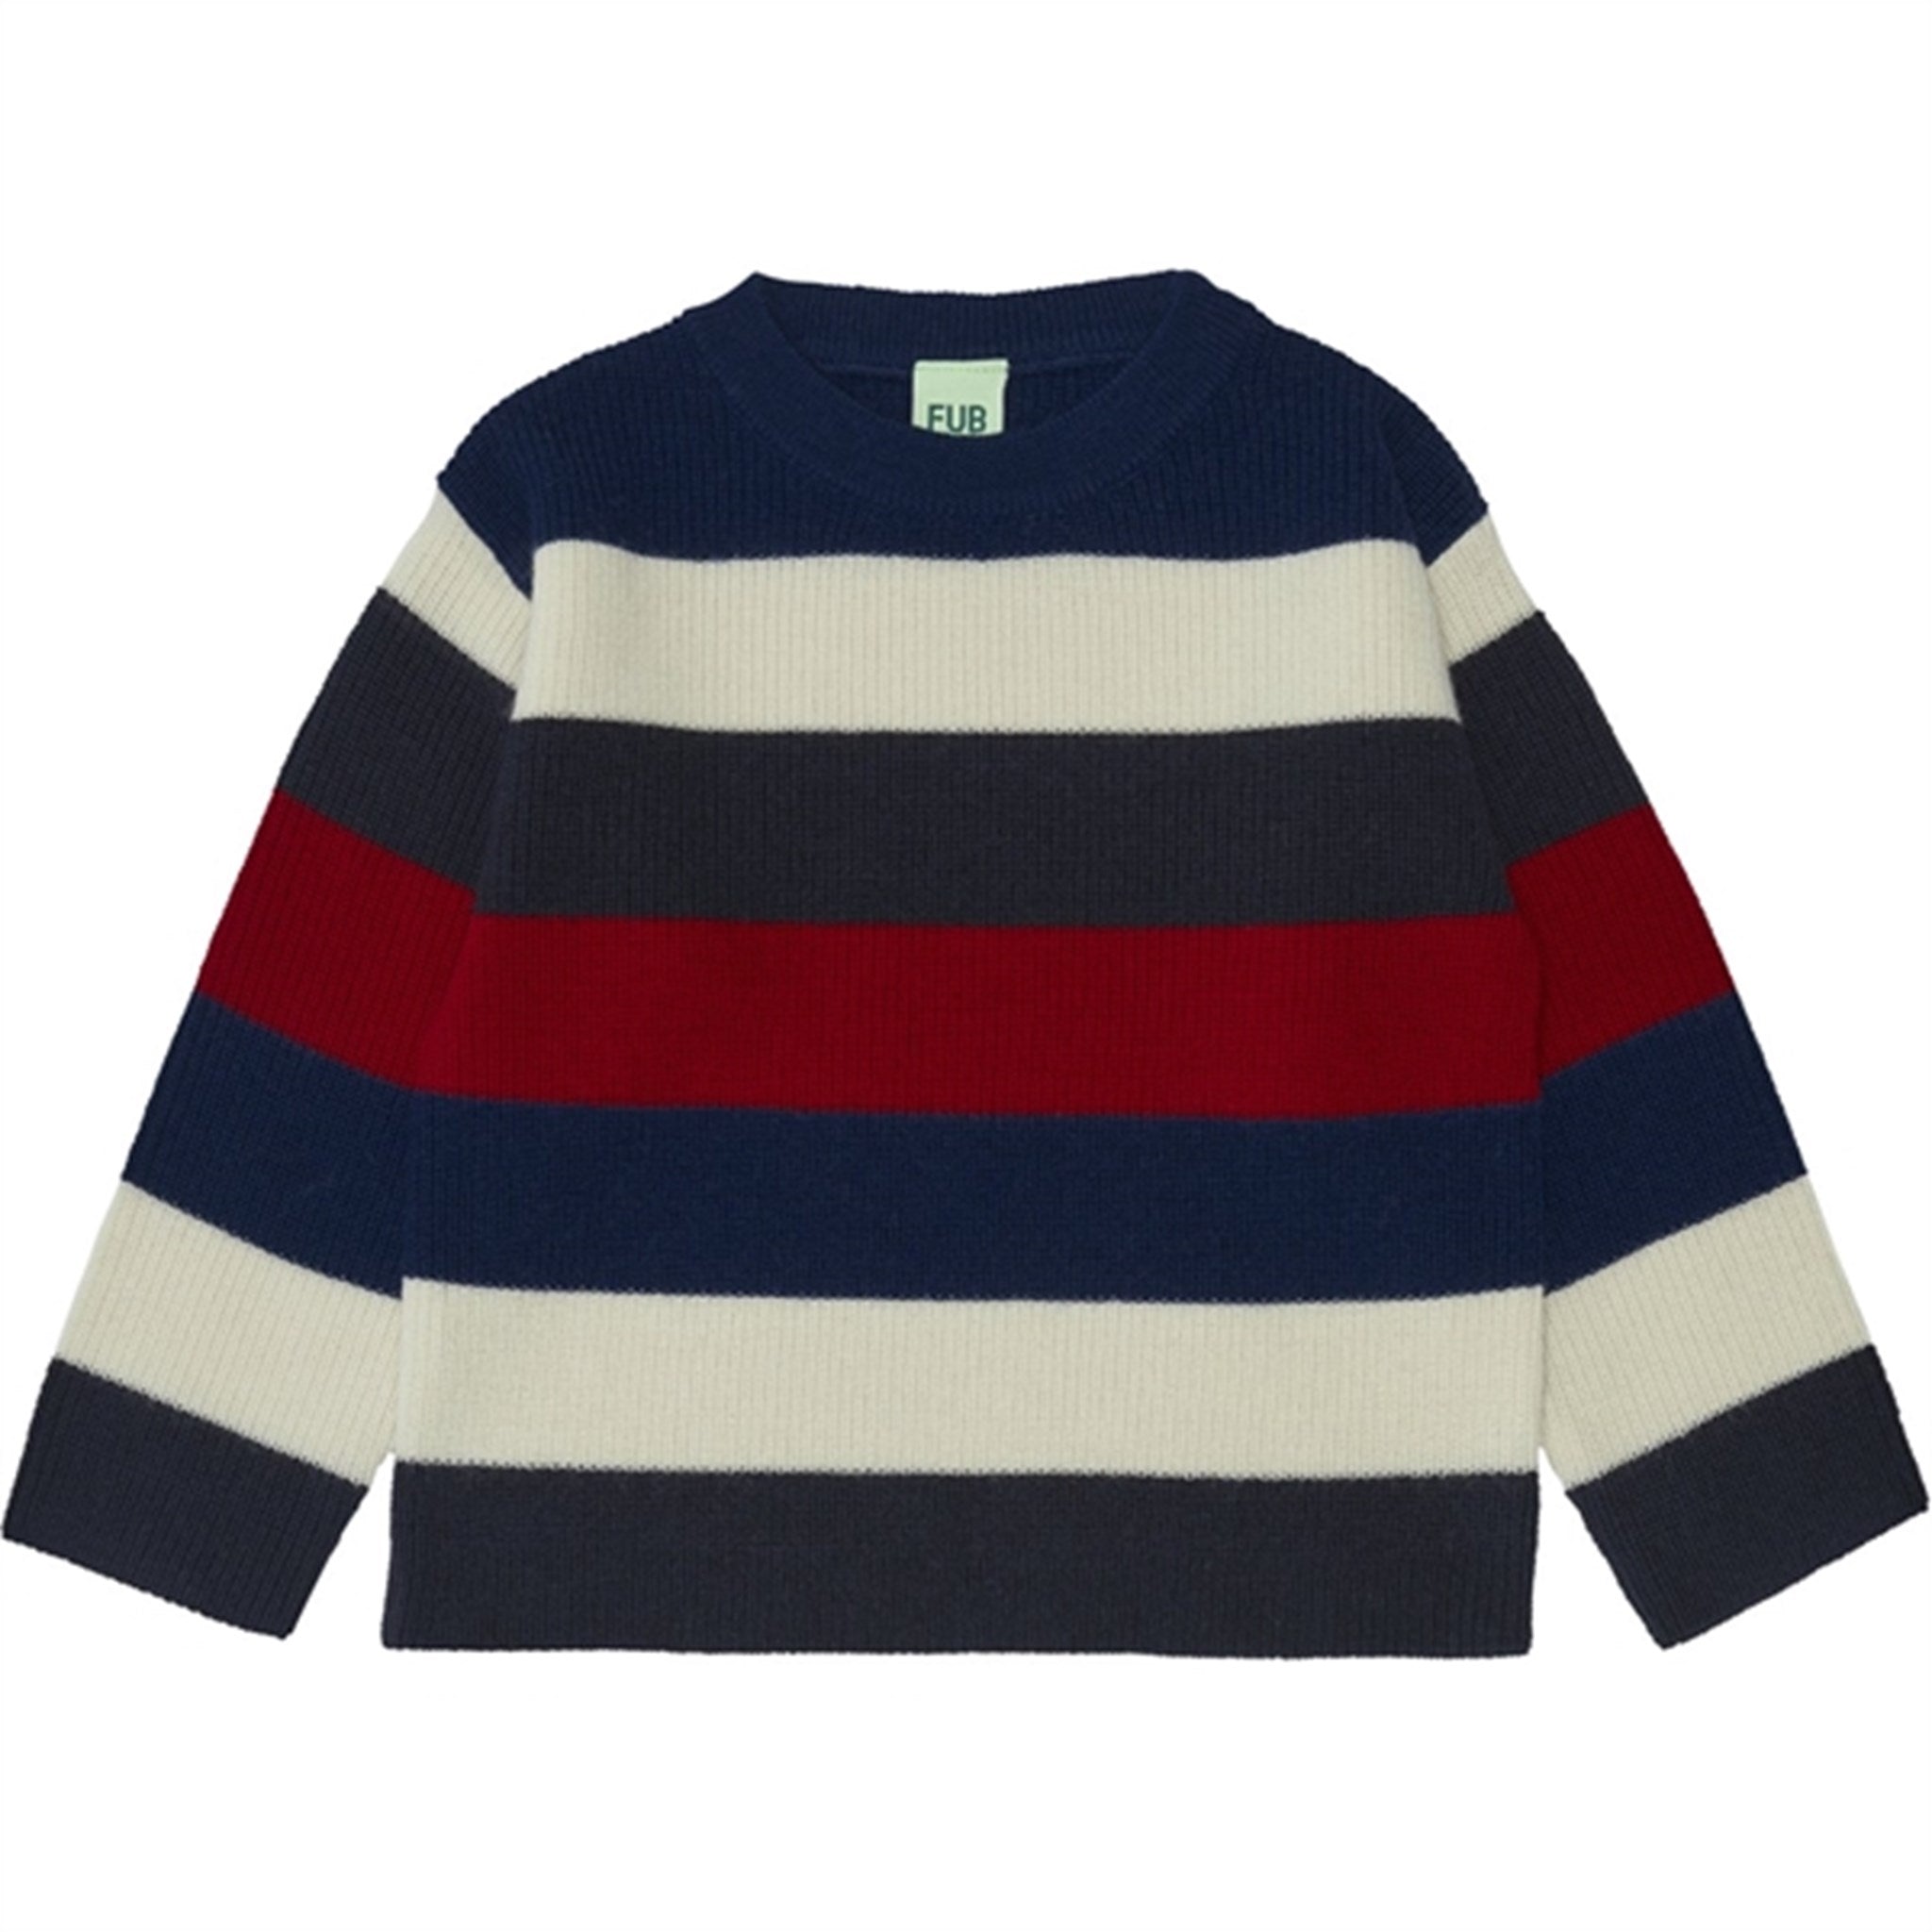 FUB Multistriped Knitted Sweater Dark Navy/Ecru/Royal Blue/Bright Red